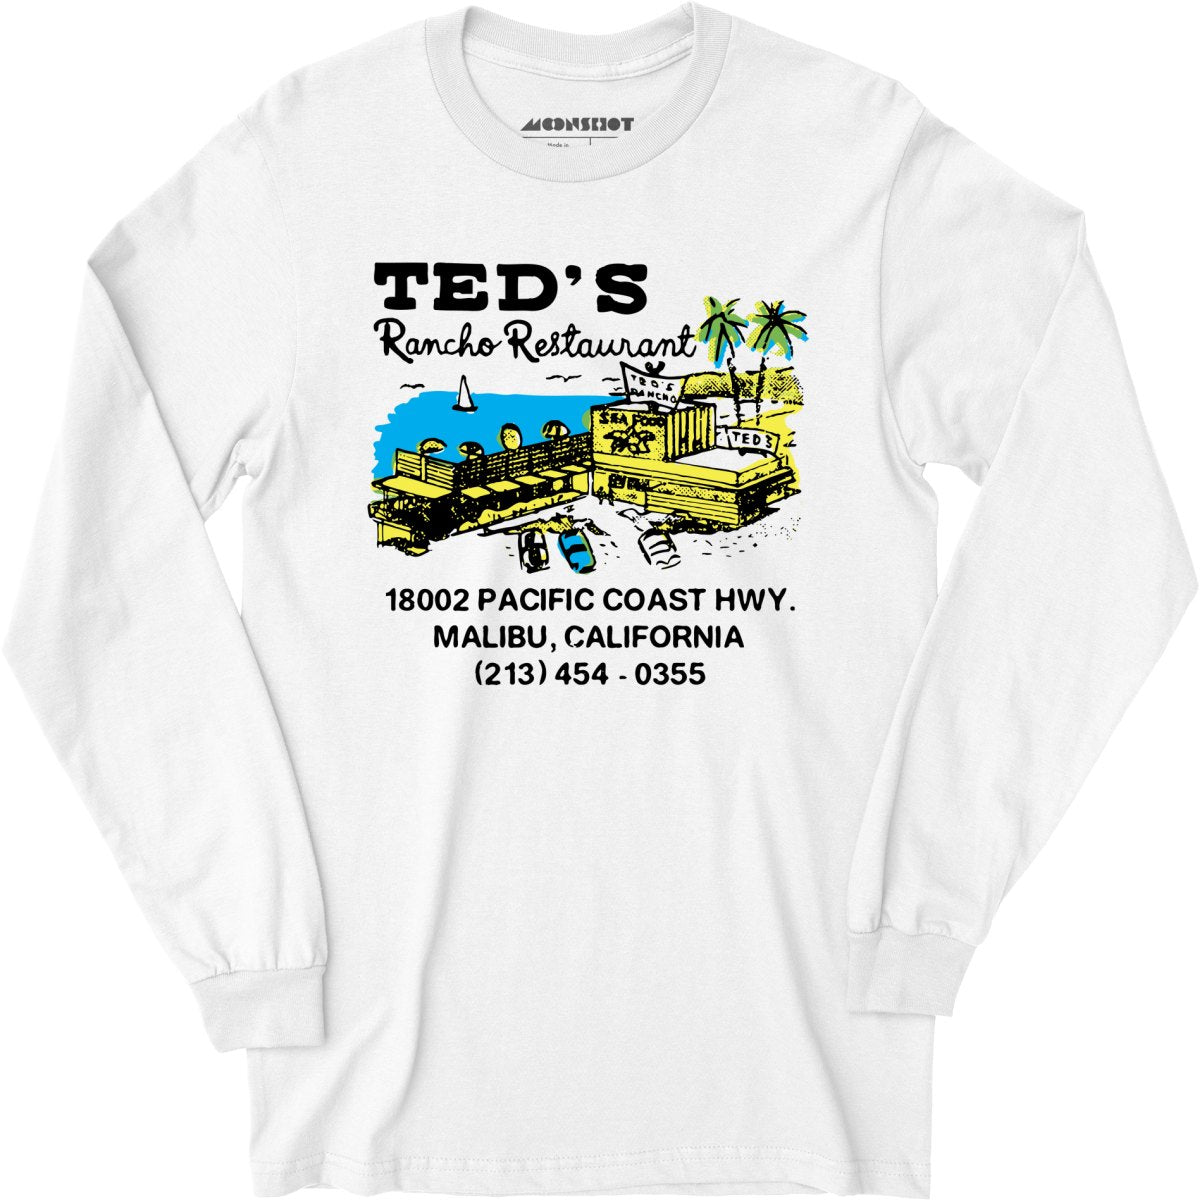 Ted's Rancho Restaurant - Malibu, CA - Vintage Restaurant - Long Sleeve T-Shirt